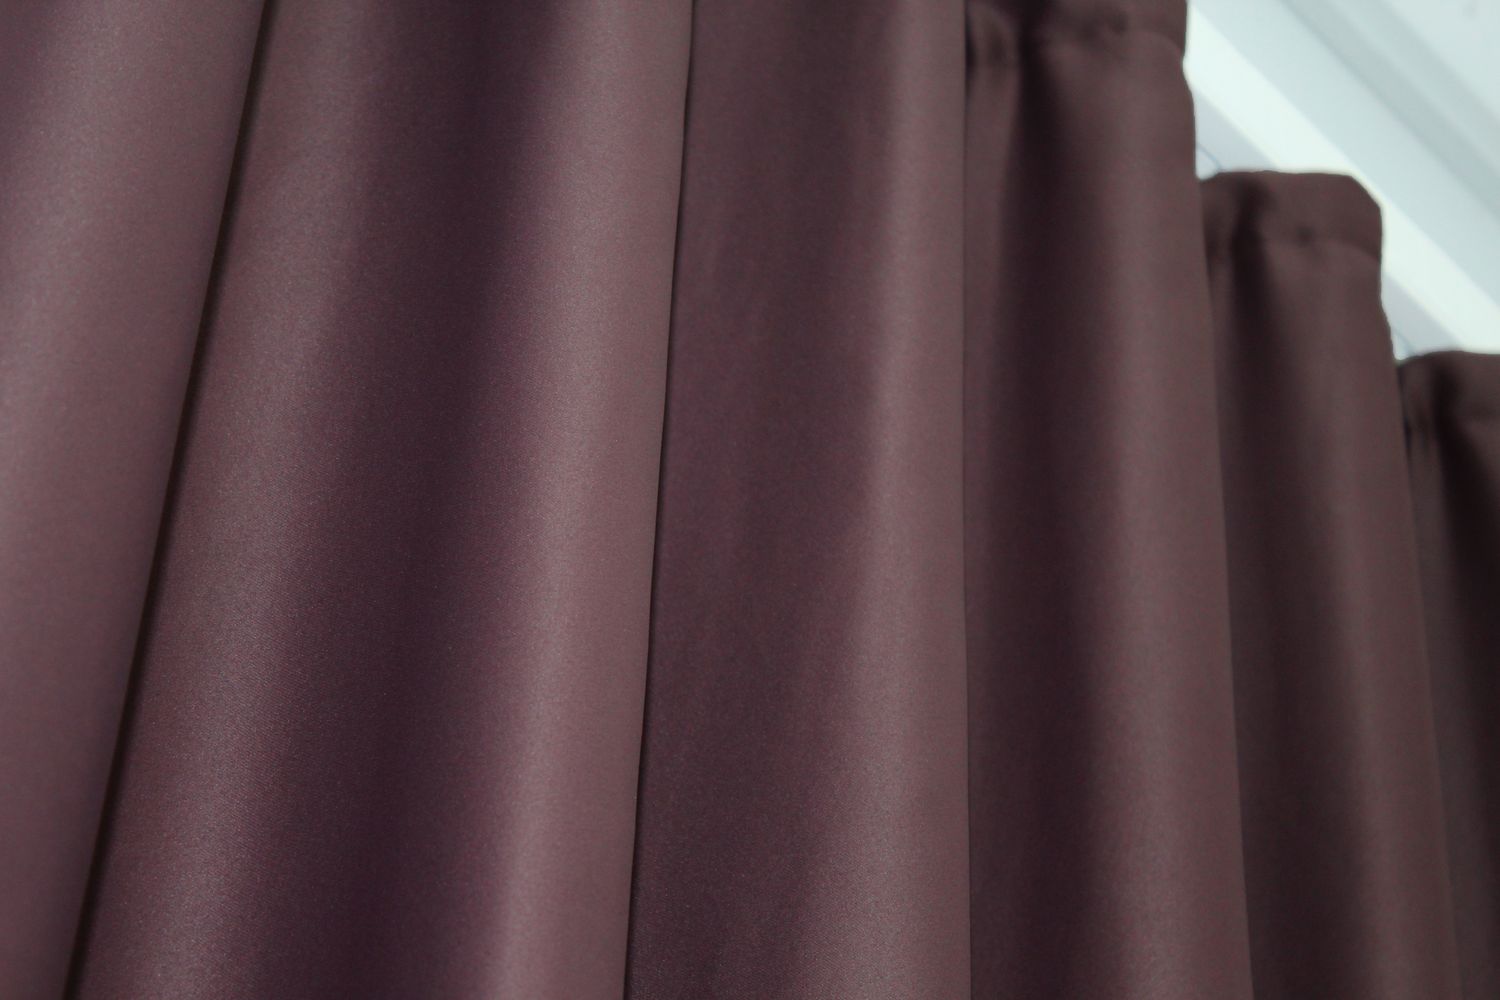 Комплект штор из ткани блэкаут "Fusion Dimout" цвет марсала 828ш, Марсала, Комплект штор (2шт. 1,5х2,7м.), 1,5 м., 2,7 м., 150, 270, 2 - 3 м., В комплекте 2 шт., Тесьма